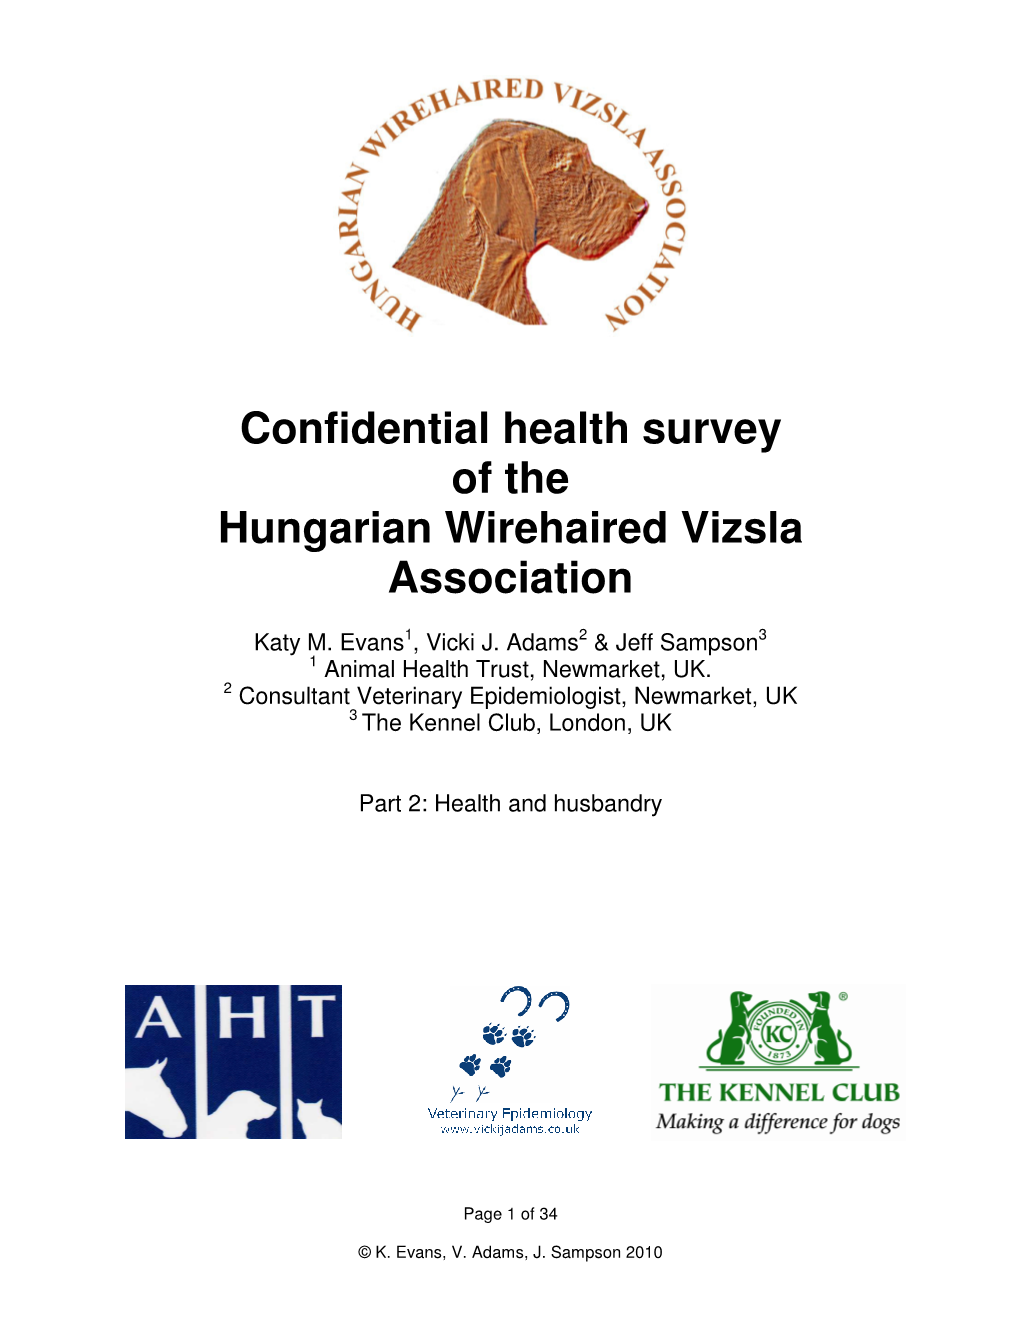 AHT Report of Health Survey